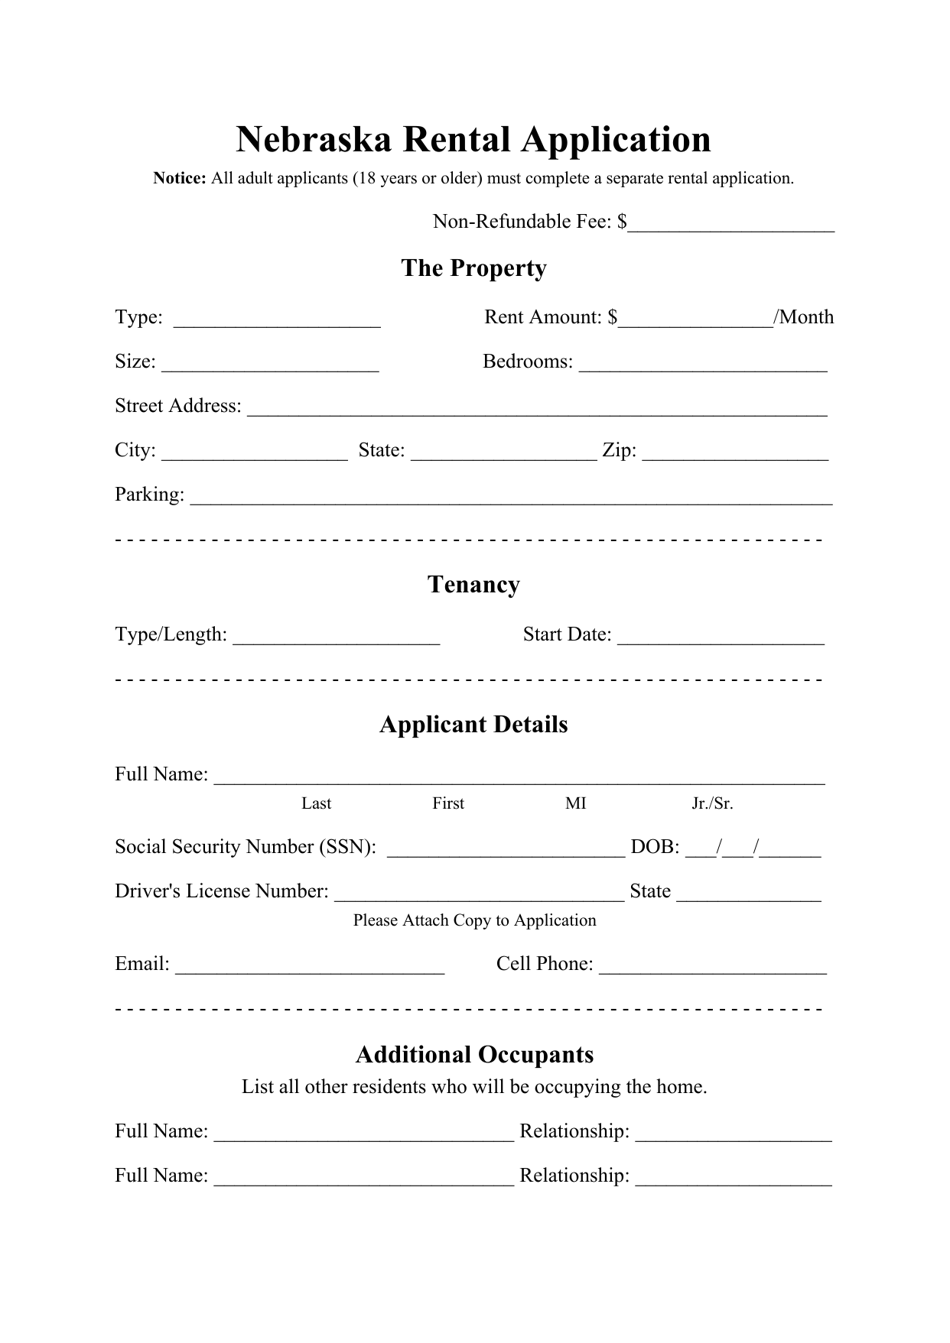 nebraska-rental-application-form-fill-out-sign-online-and-download-pdf-templateroller